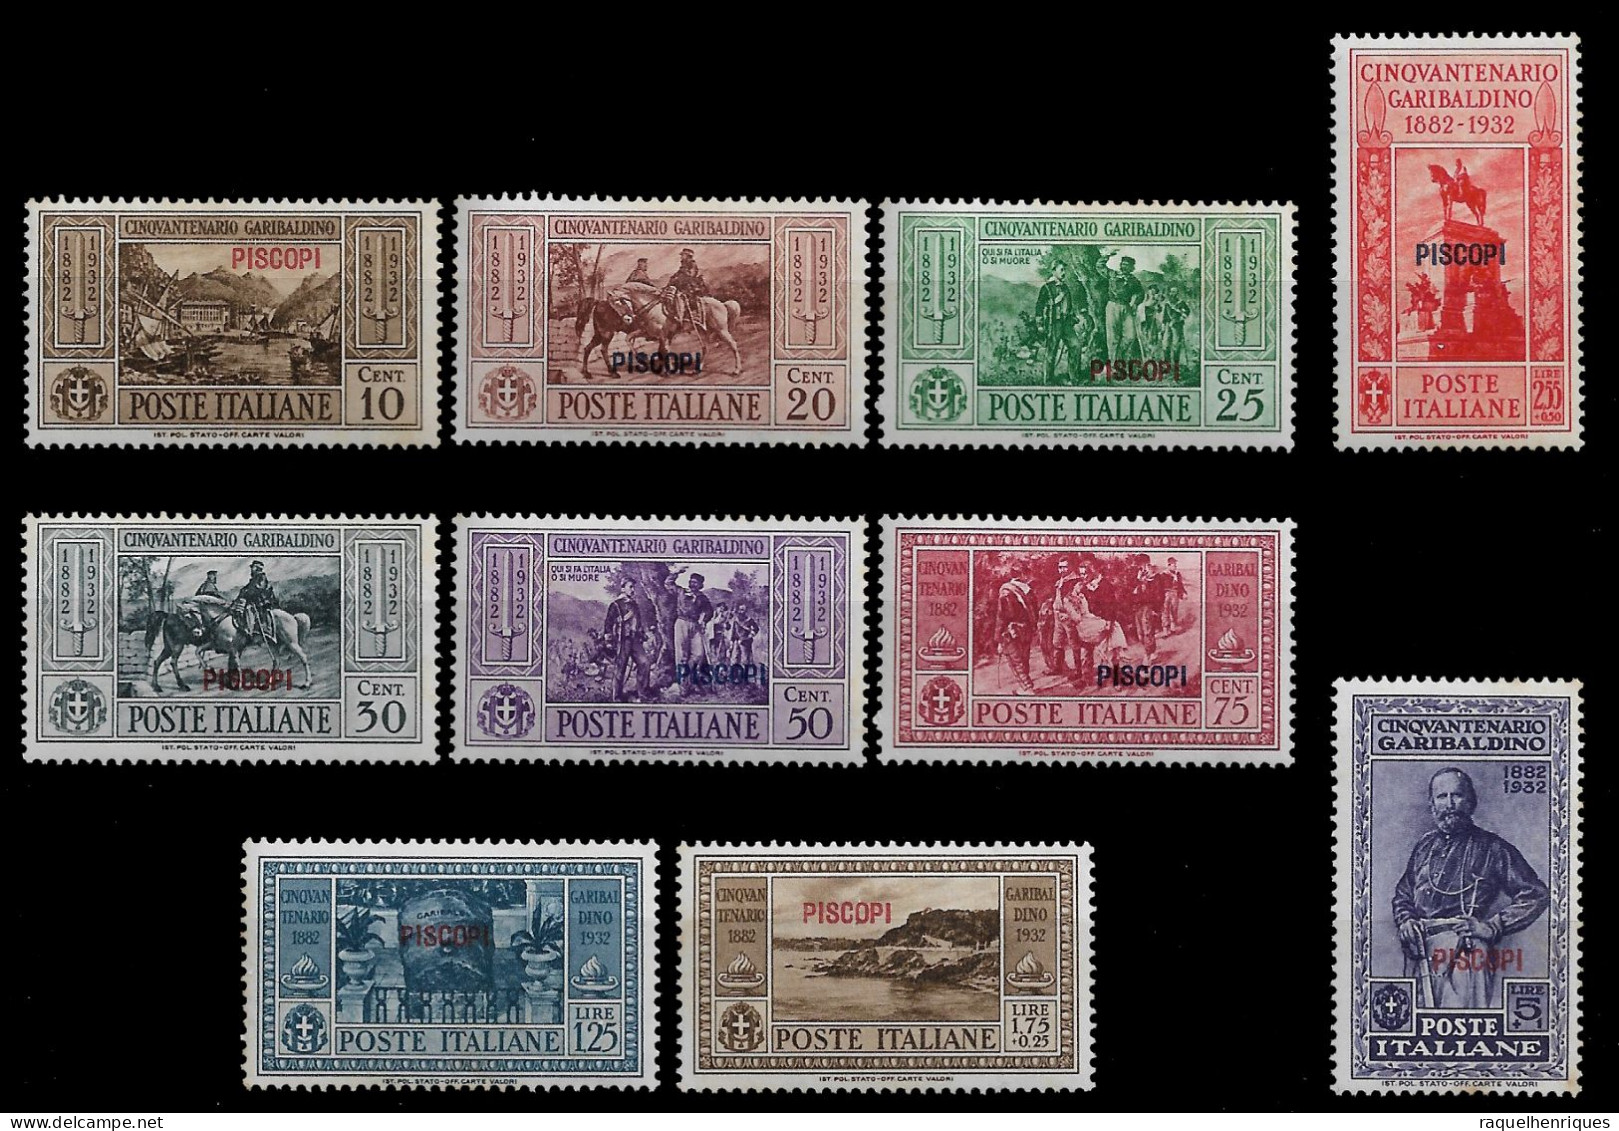 Postage Stamps Of Italian Colonies - PISCOPI 1932 Giuseppe Garibaldi SET MNH (BA5#399) - Egée (Piscopi)